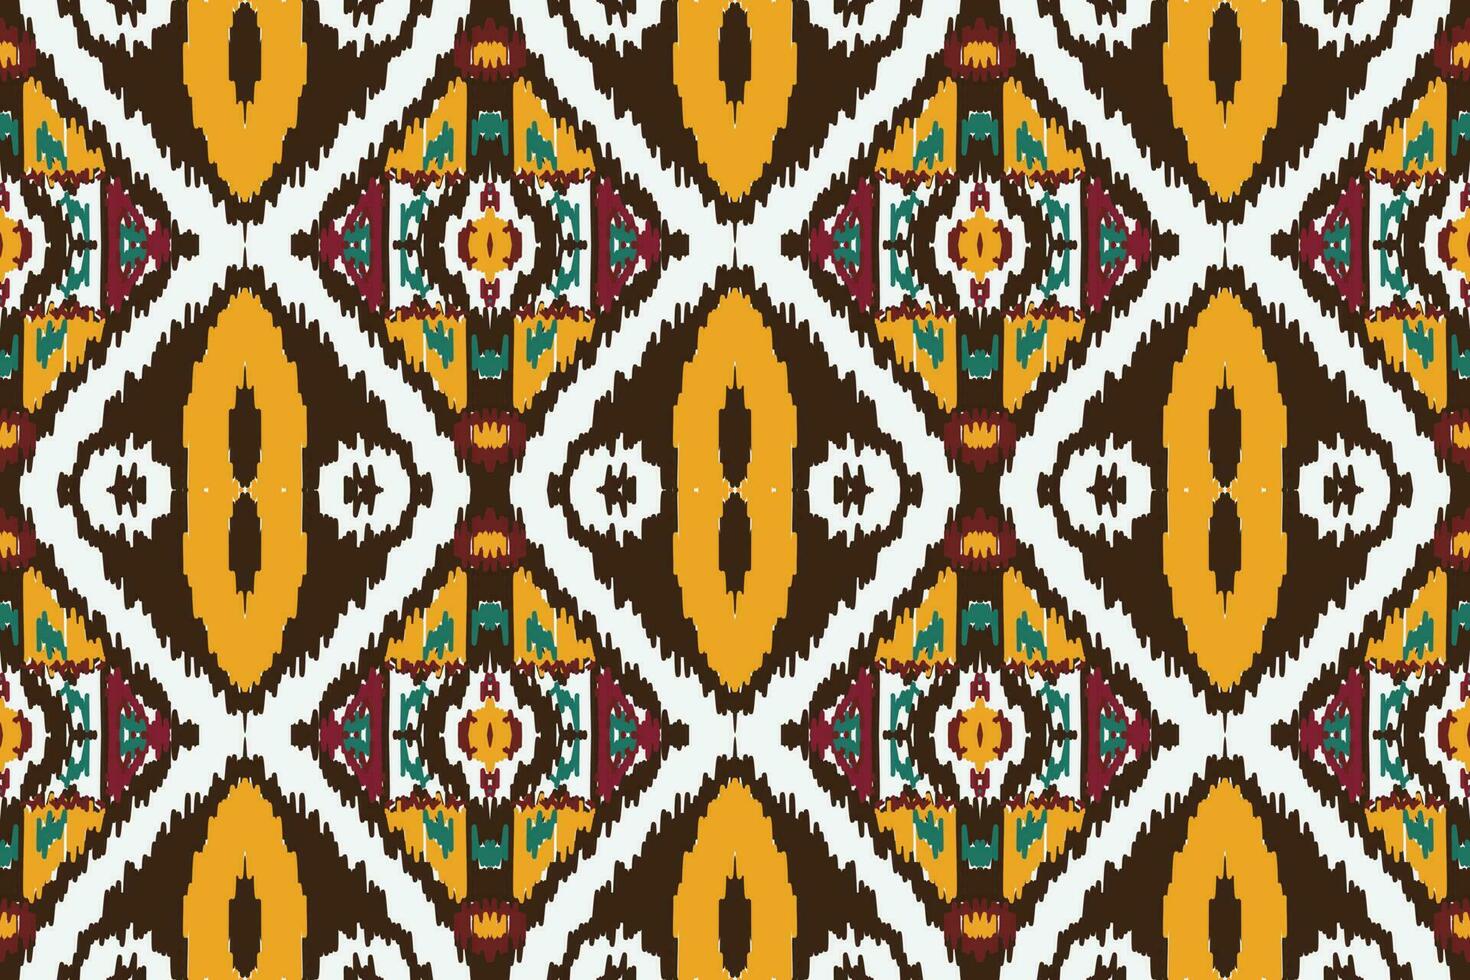 africano ikat floral paisley bordado fundo. geométrico étnico oriental padronizar tradicional. ikat asteca estilo abstrato vetor ilustração. Projeto para impressão textura, tecido, saree, sari, tapete.